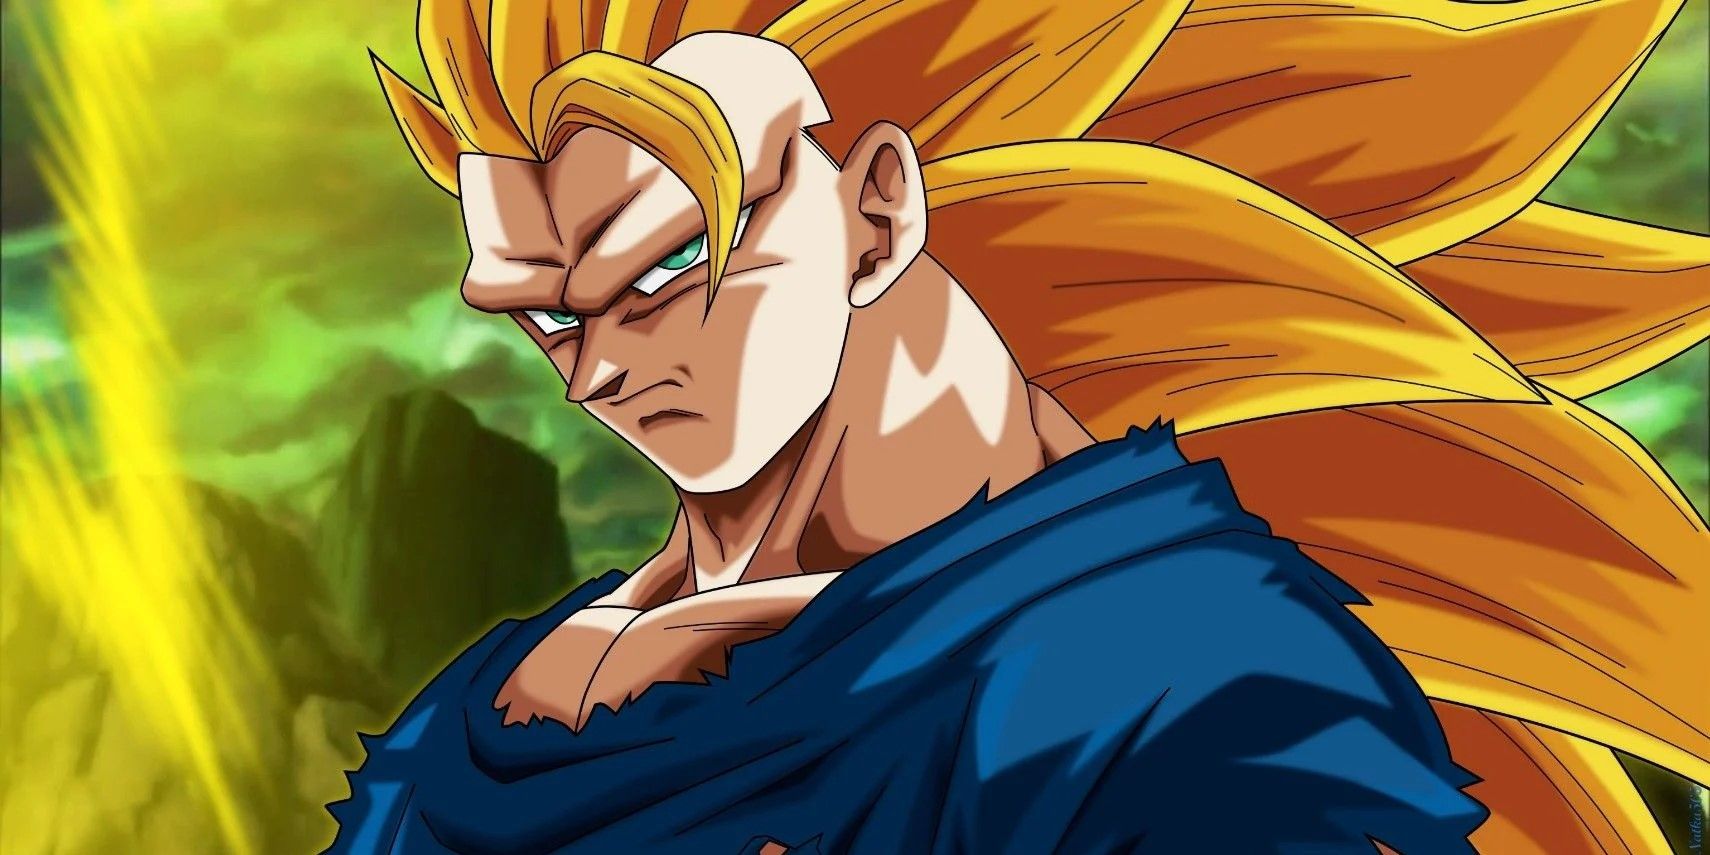 An image of Goku in Super Saiyan 3 form